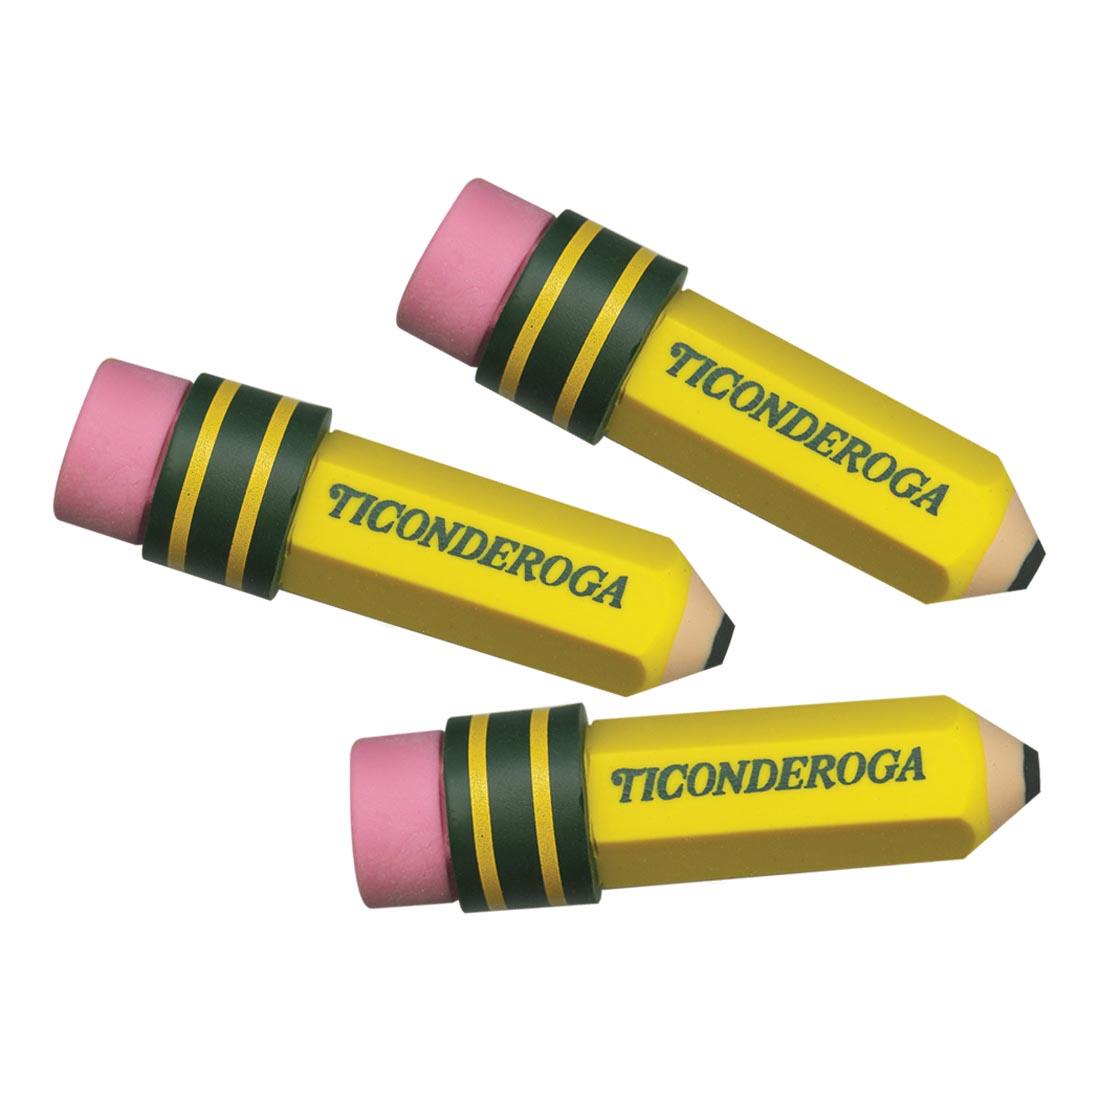 Erasers look like chubby Ticonderoga Pencils